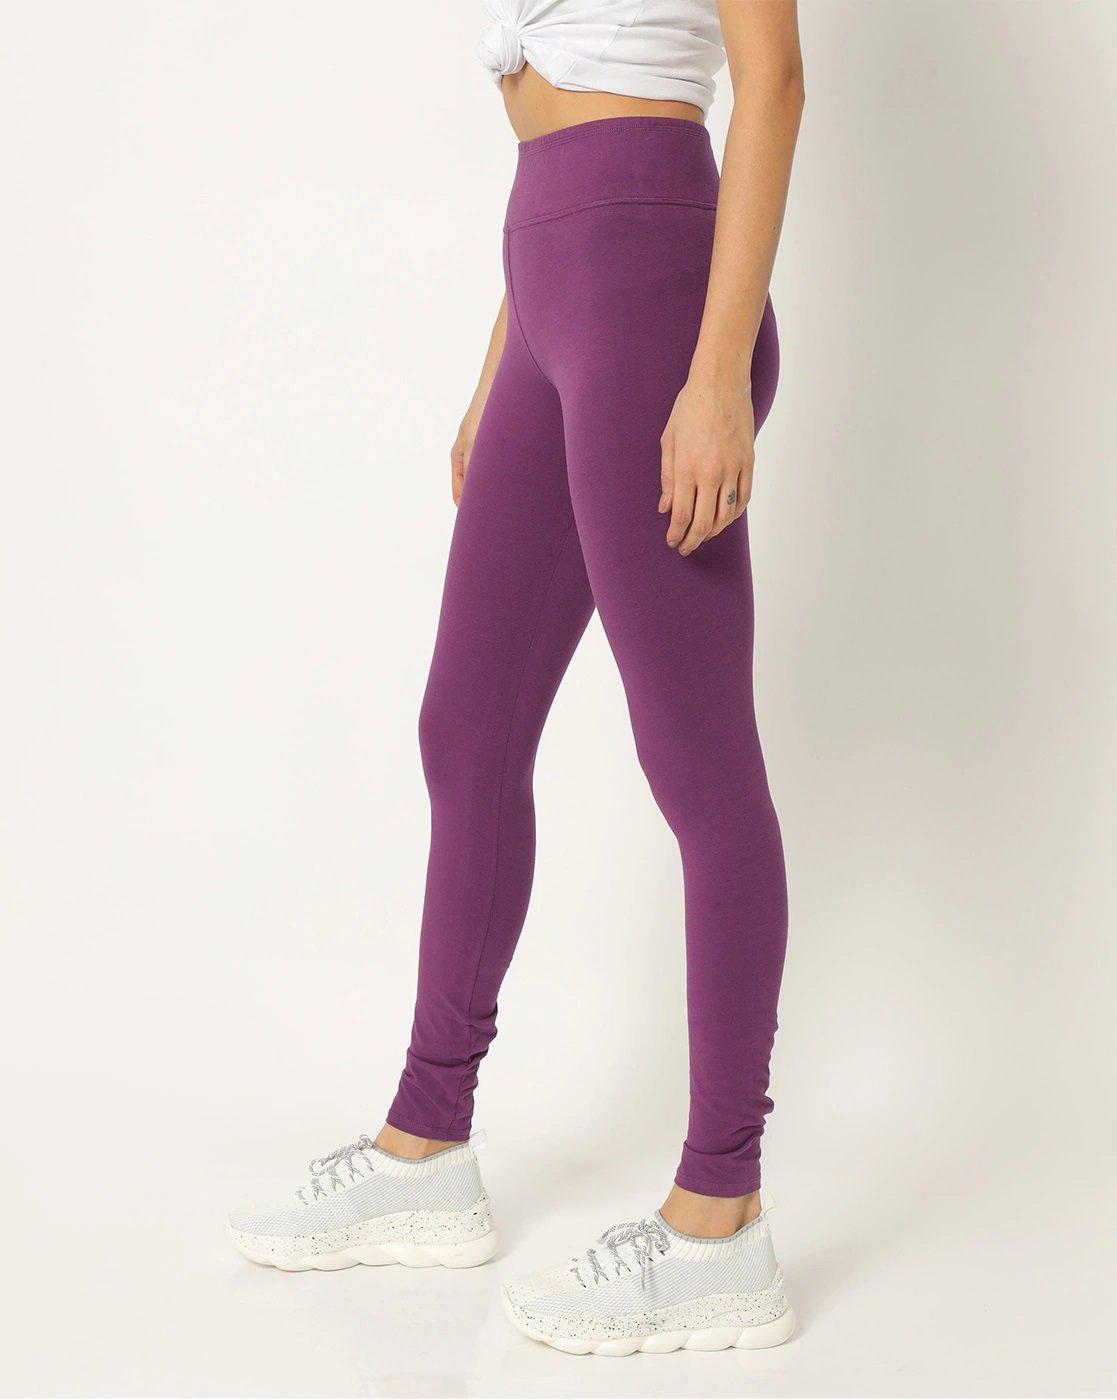 Women's Cotton Stretch Yoga Running Gym Legging Purple - Stilento